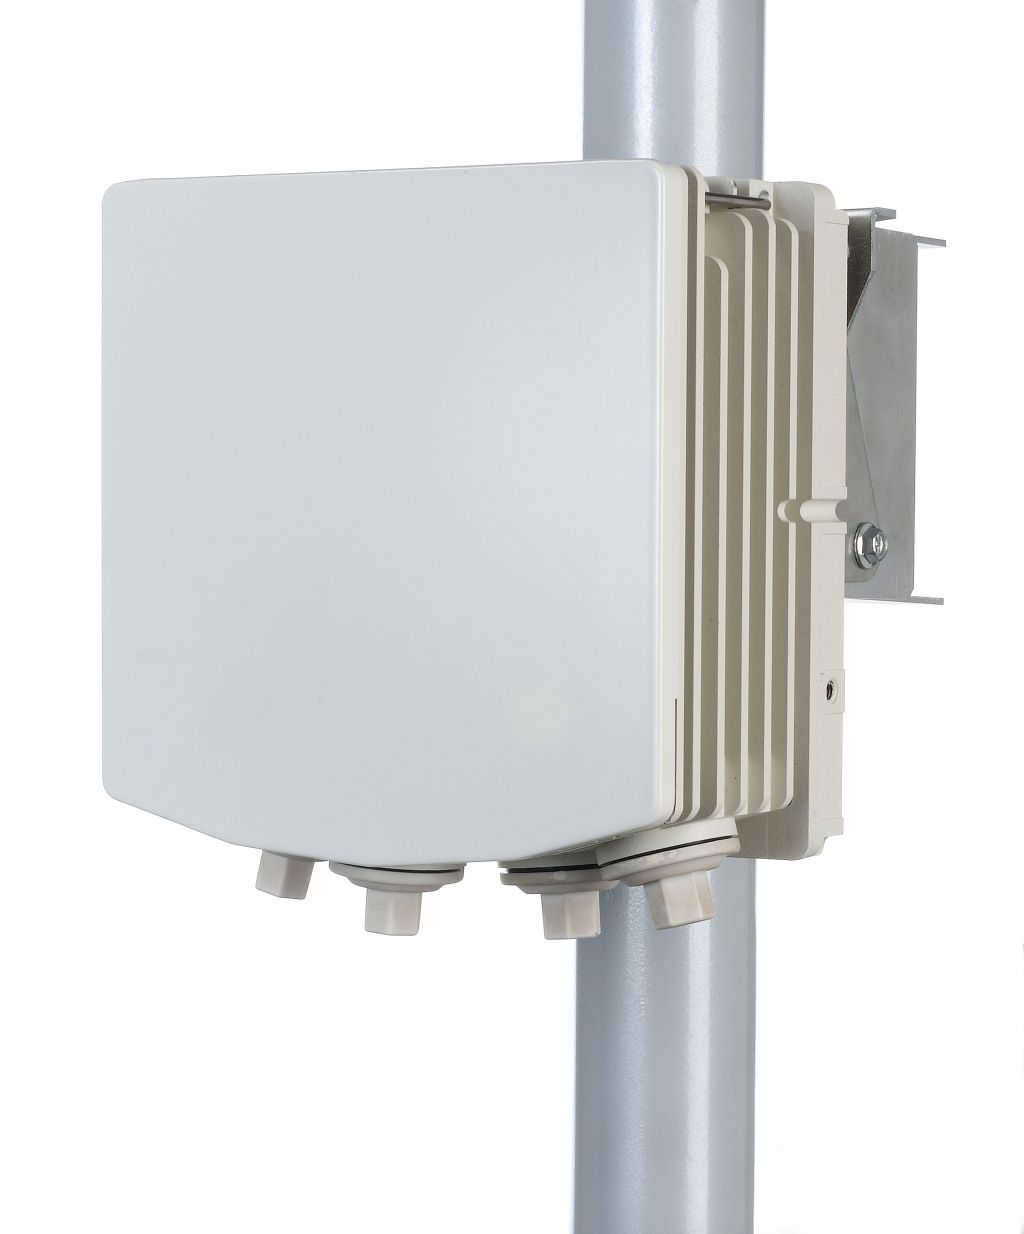 SIKLU 60 GHz Link Set 2x EtherHaul 600Tx ODU mit 35dBi Antenne, Vorkonfiguriertes Linkset